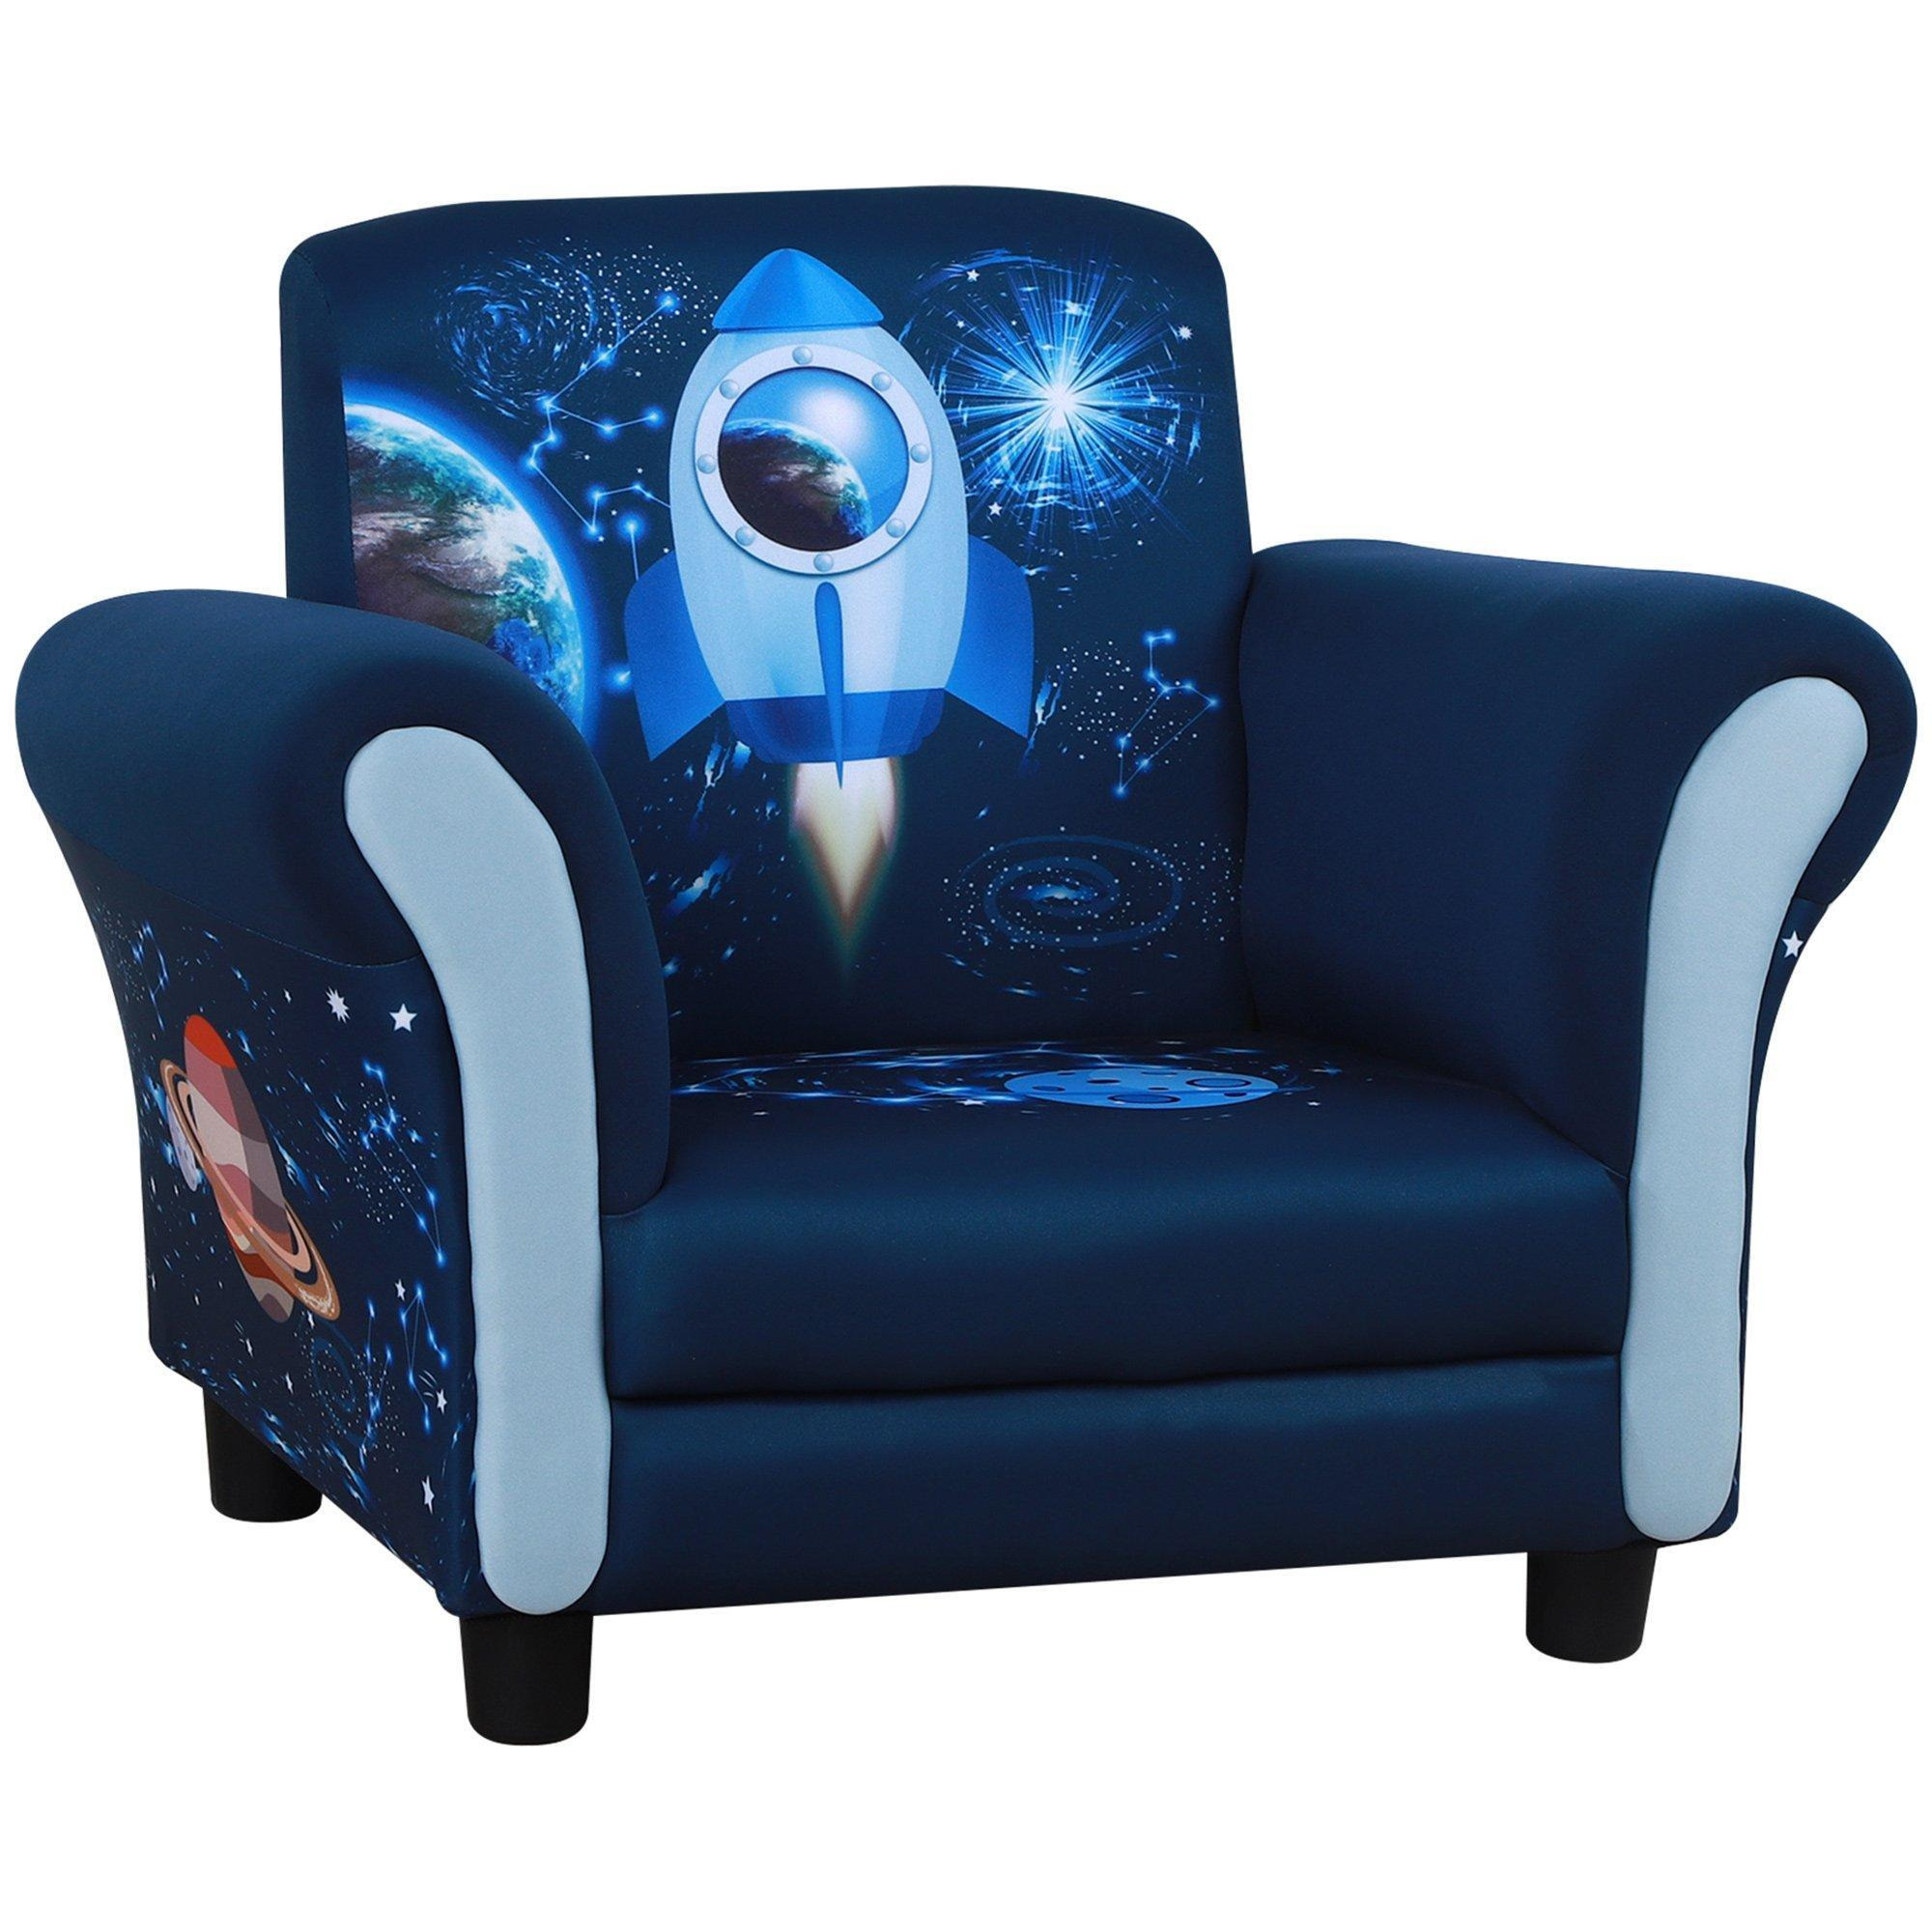 Space Rocket Children Kids Armchair Sofa Fun omfortable Wood Frame 3-6 Yrs Blue - image 1